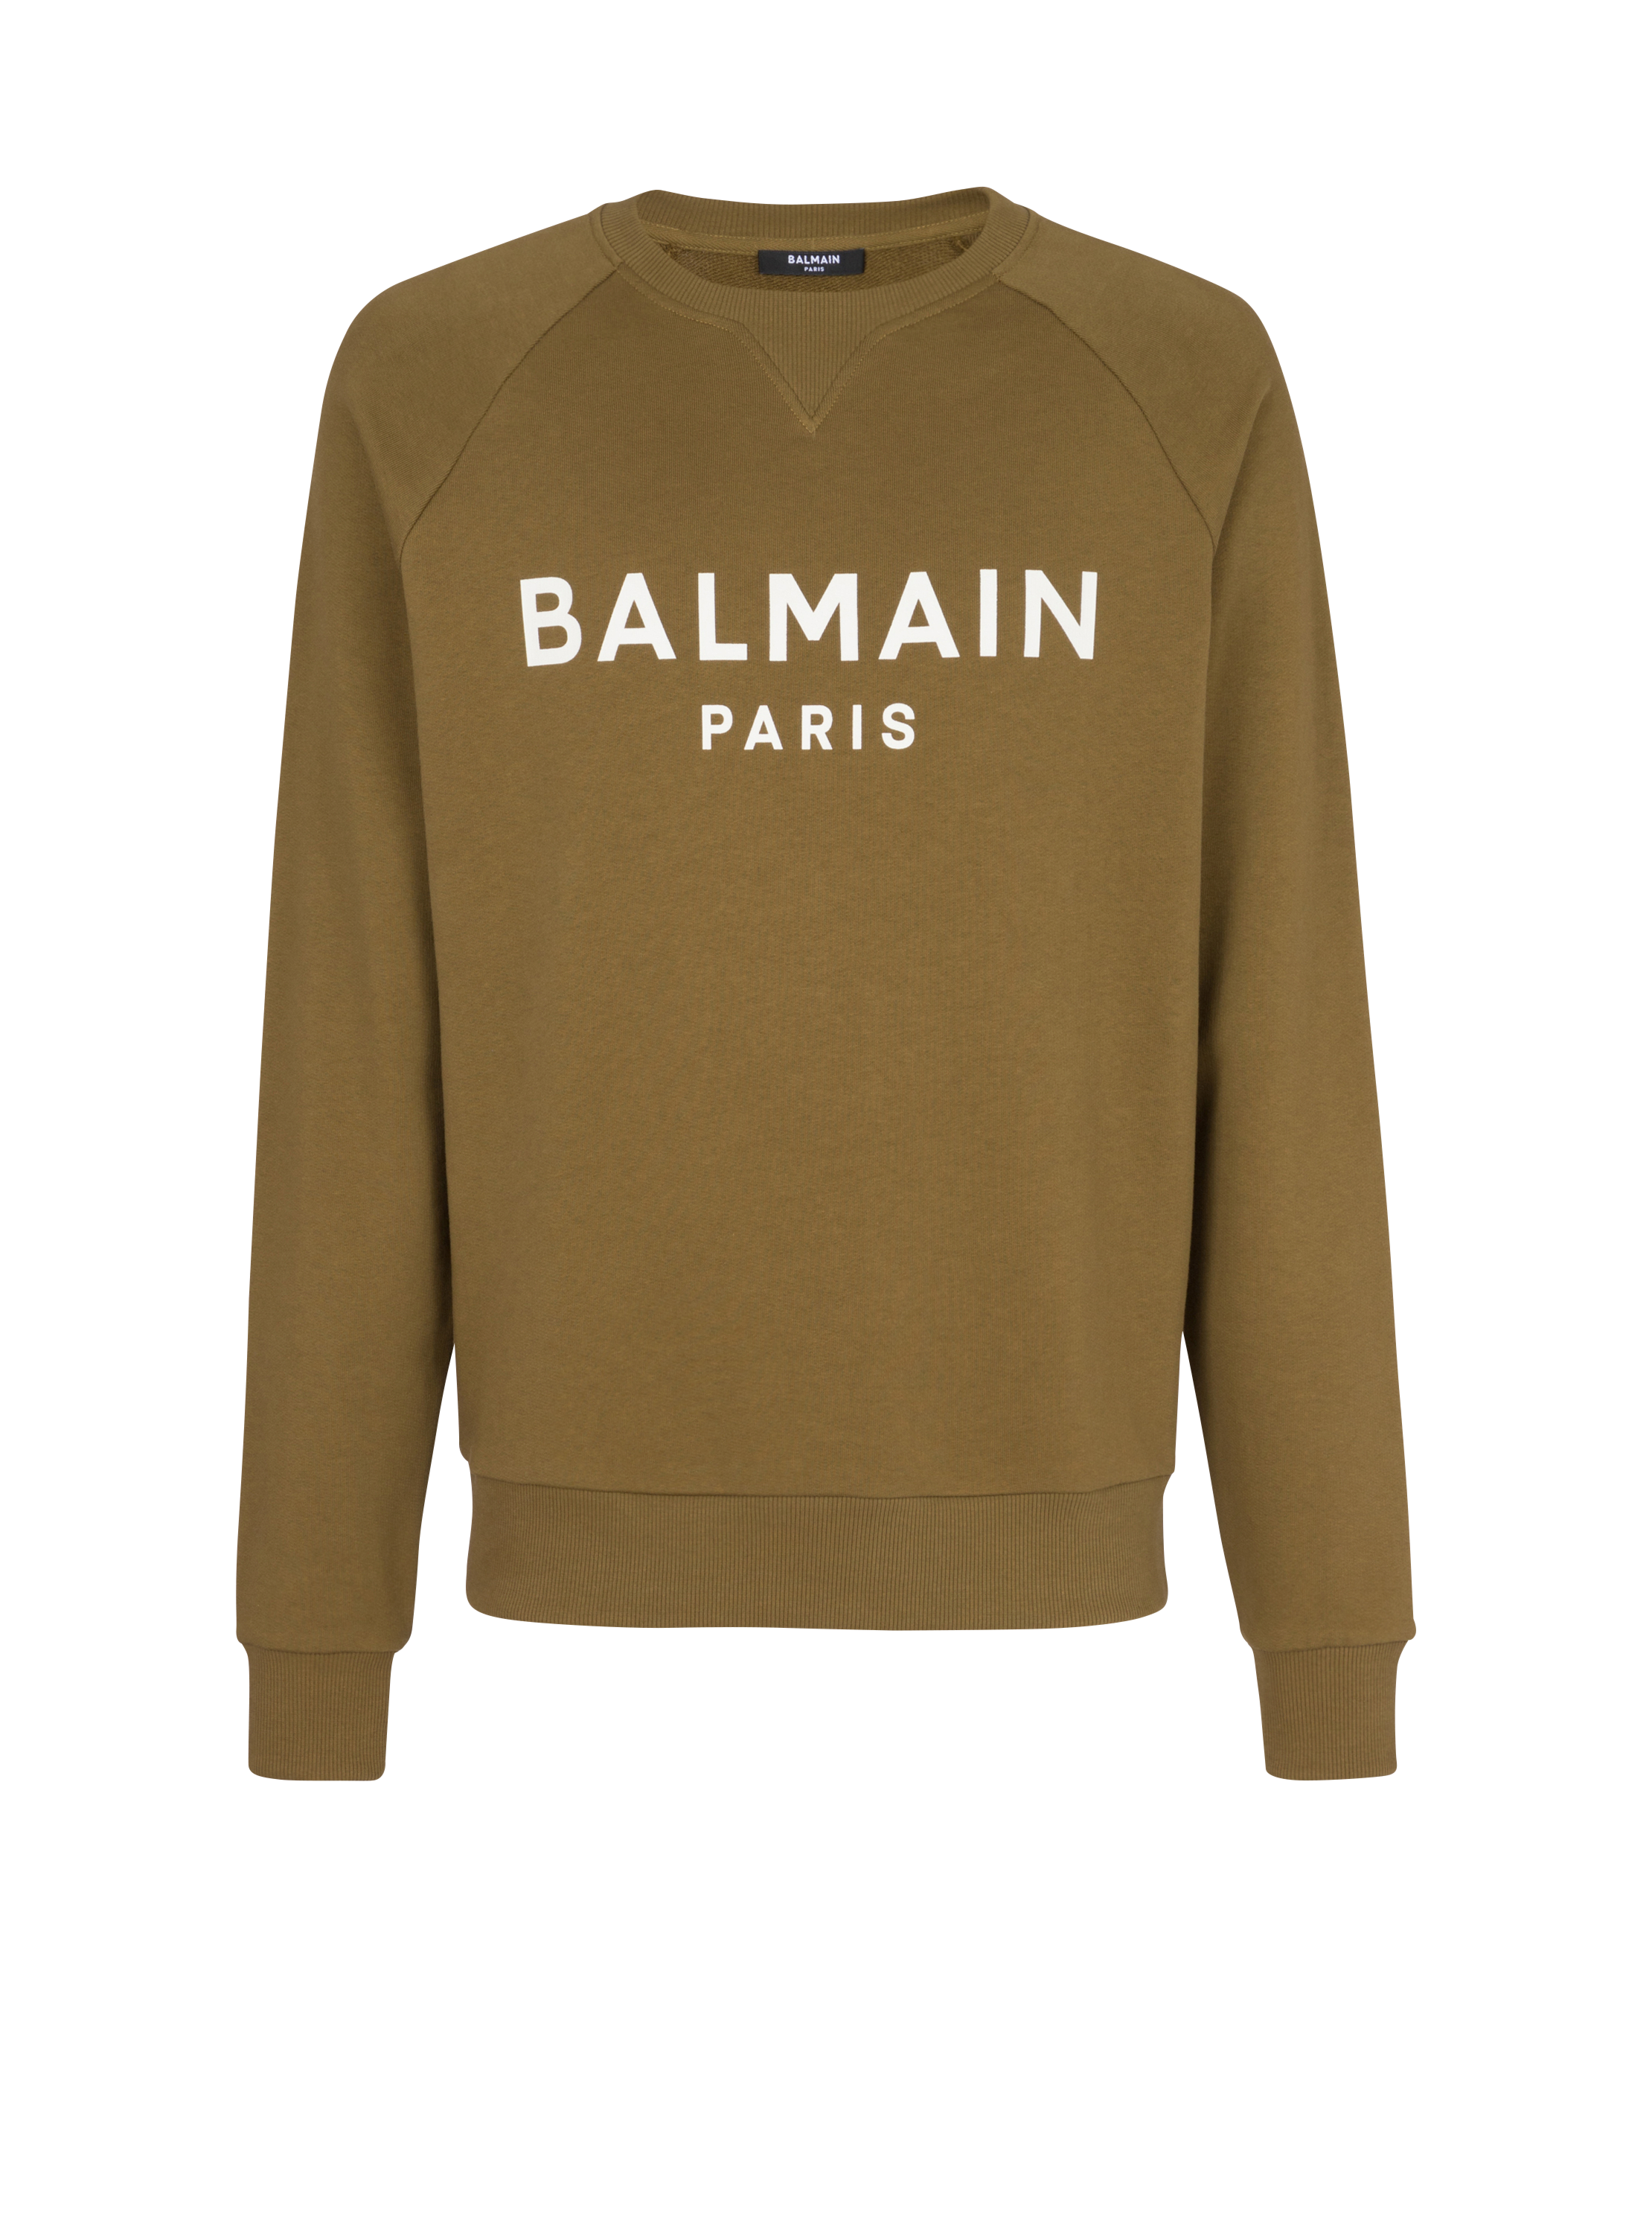 Sweatshirt aus Baumwolle mit aufgedrucktem Balmain-Logo, khaki, hi-res